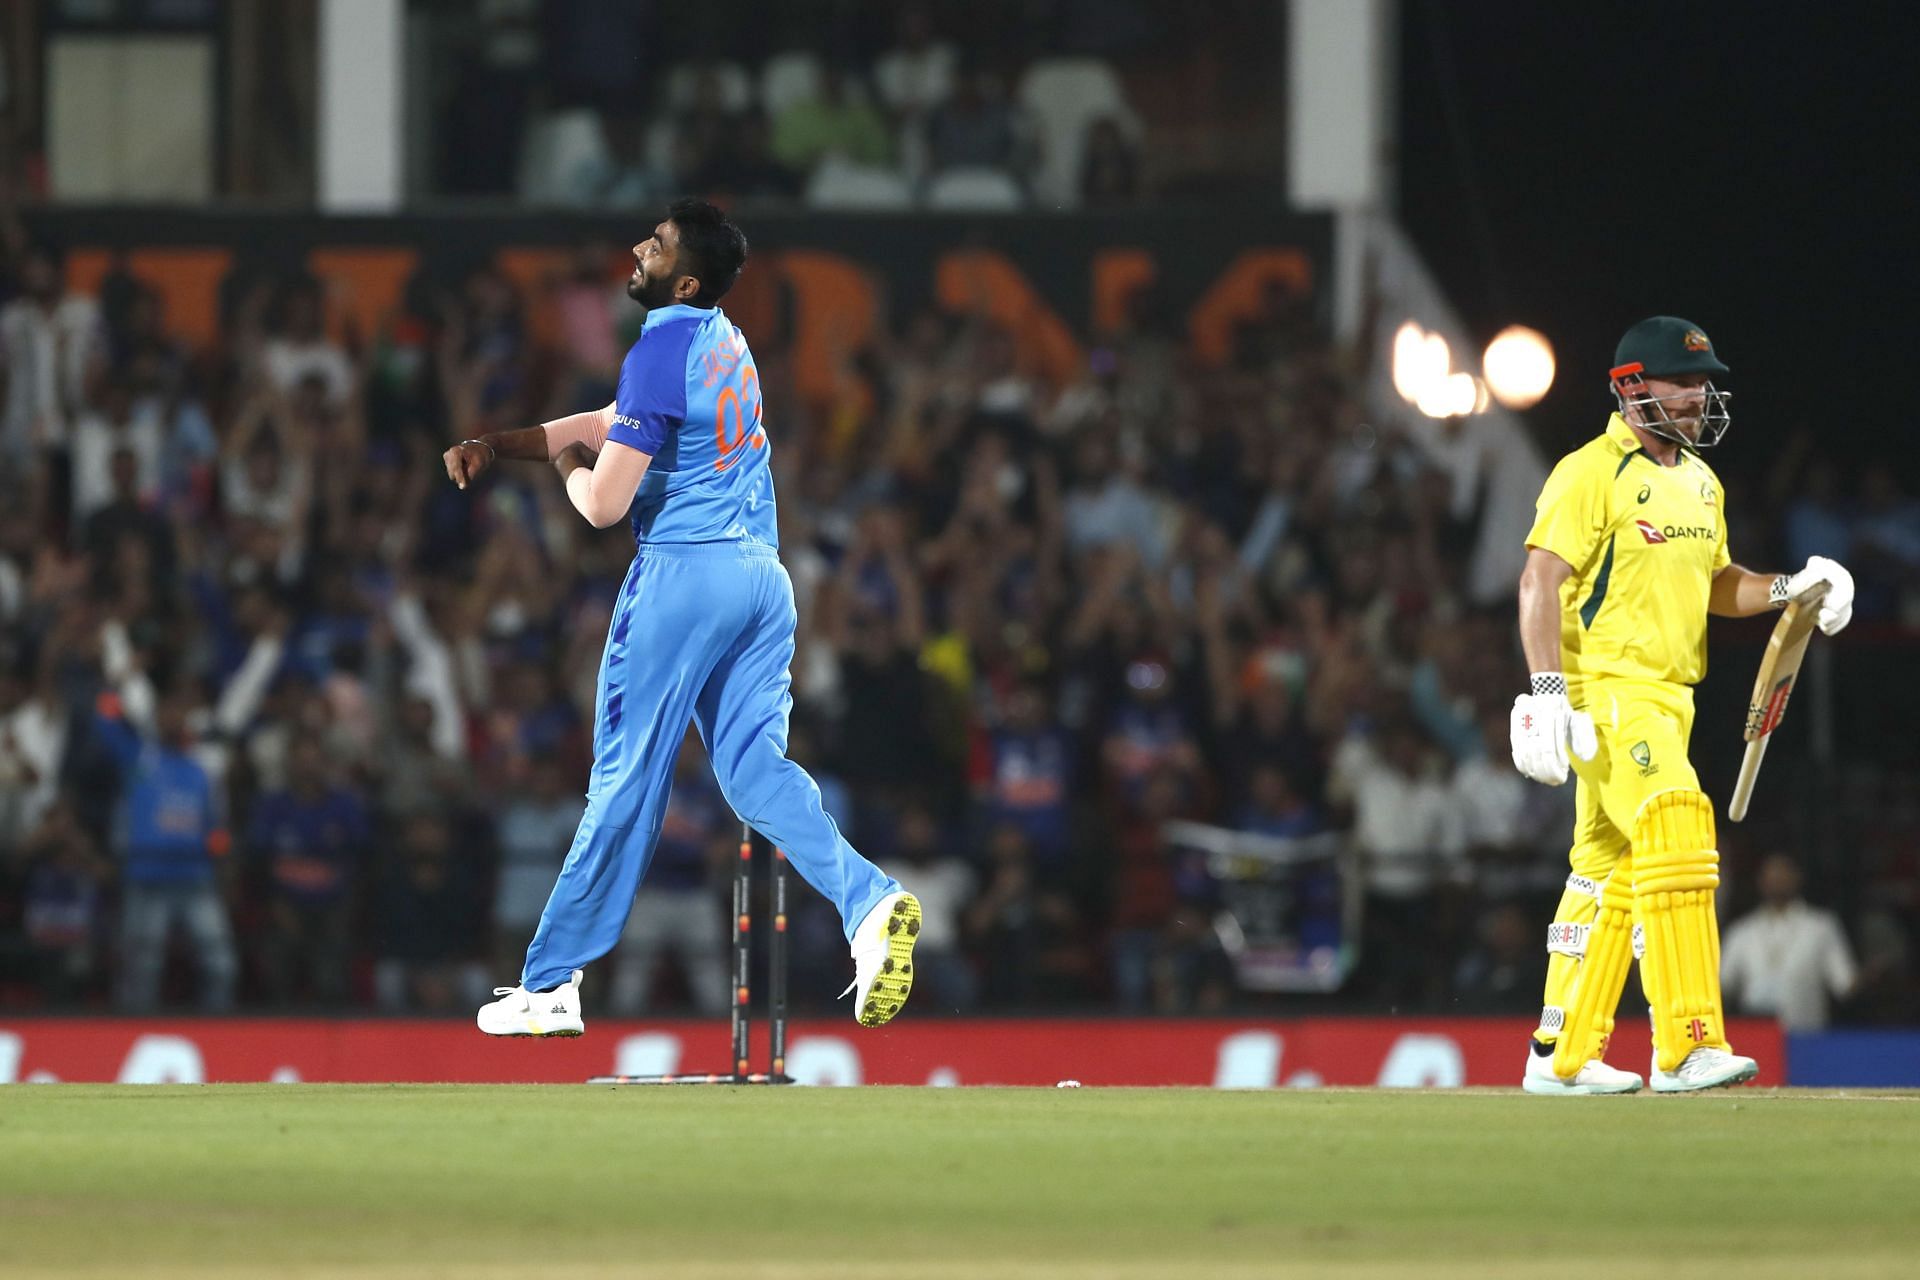 India vs Australia - T20 International Series: Game 2